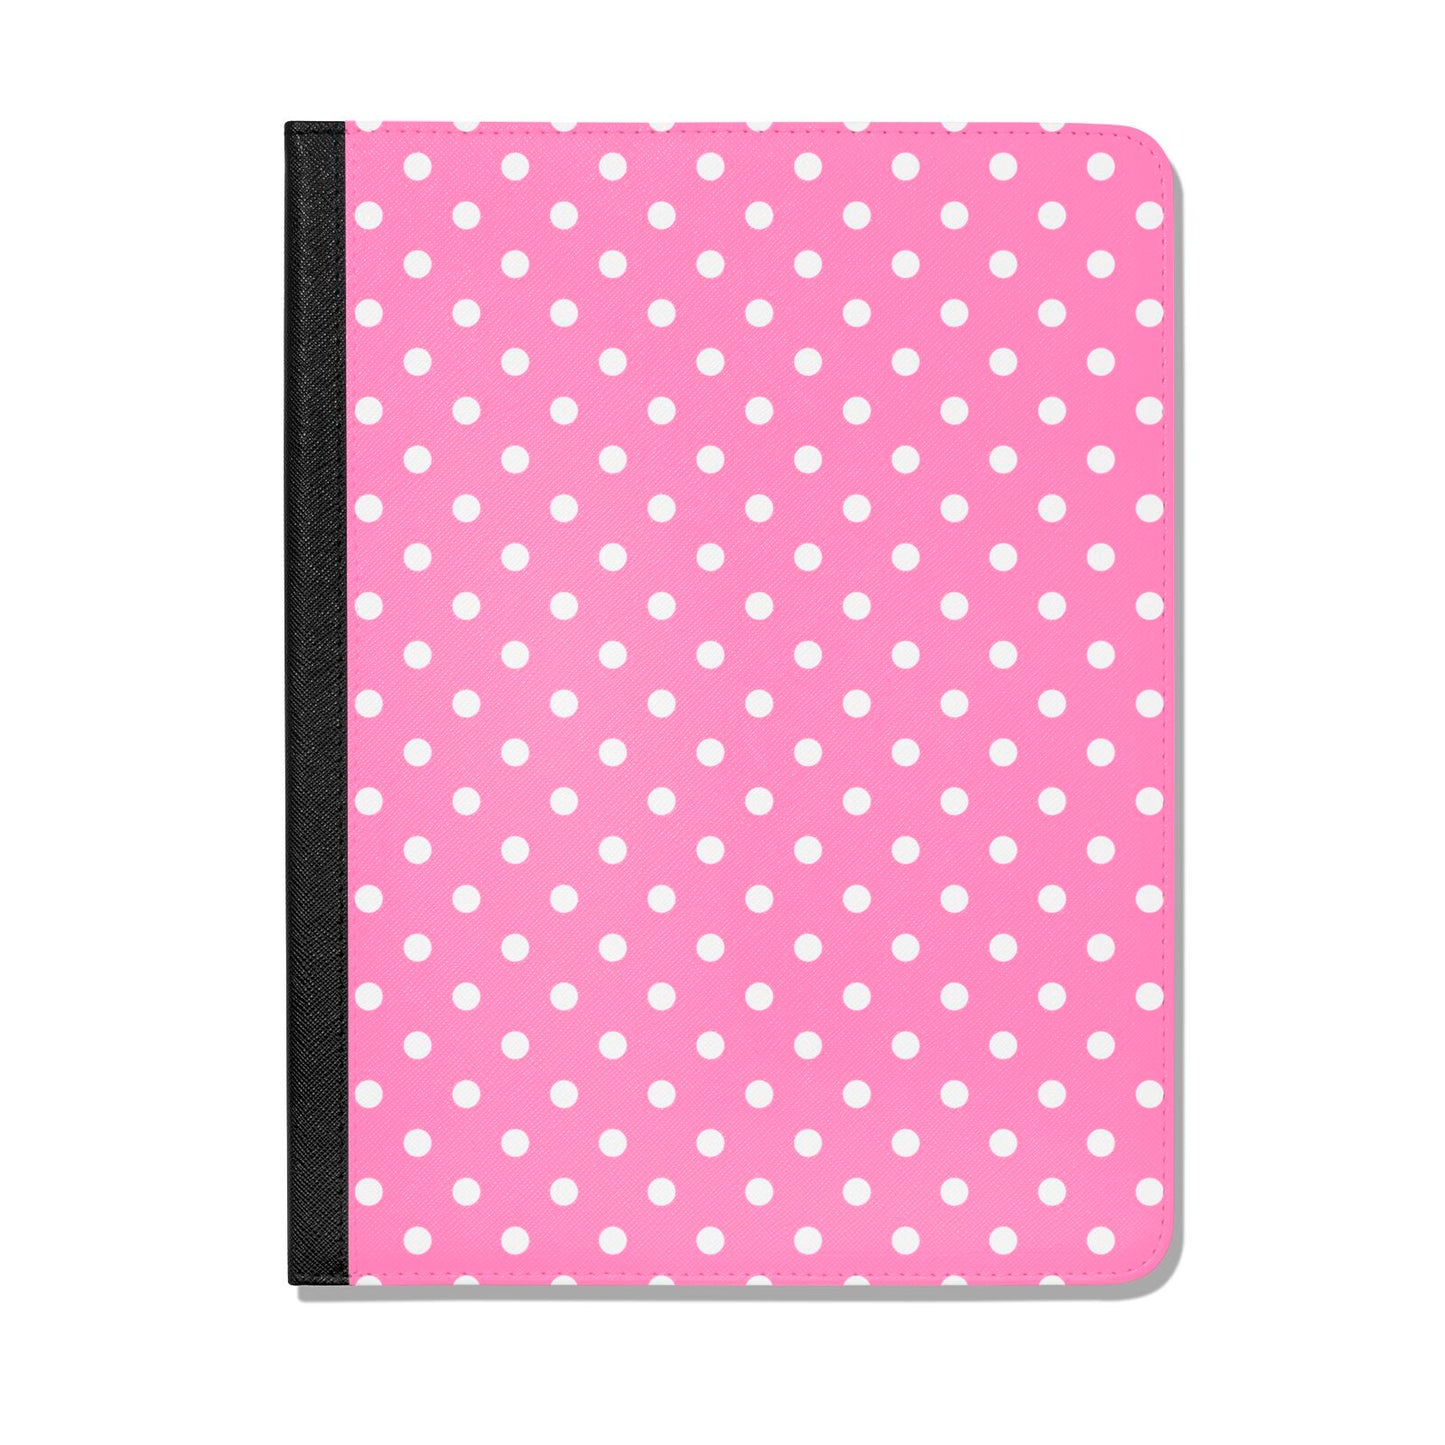 Pink Polka Dot Apple iPad Leather Folio Case